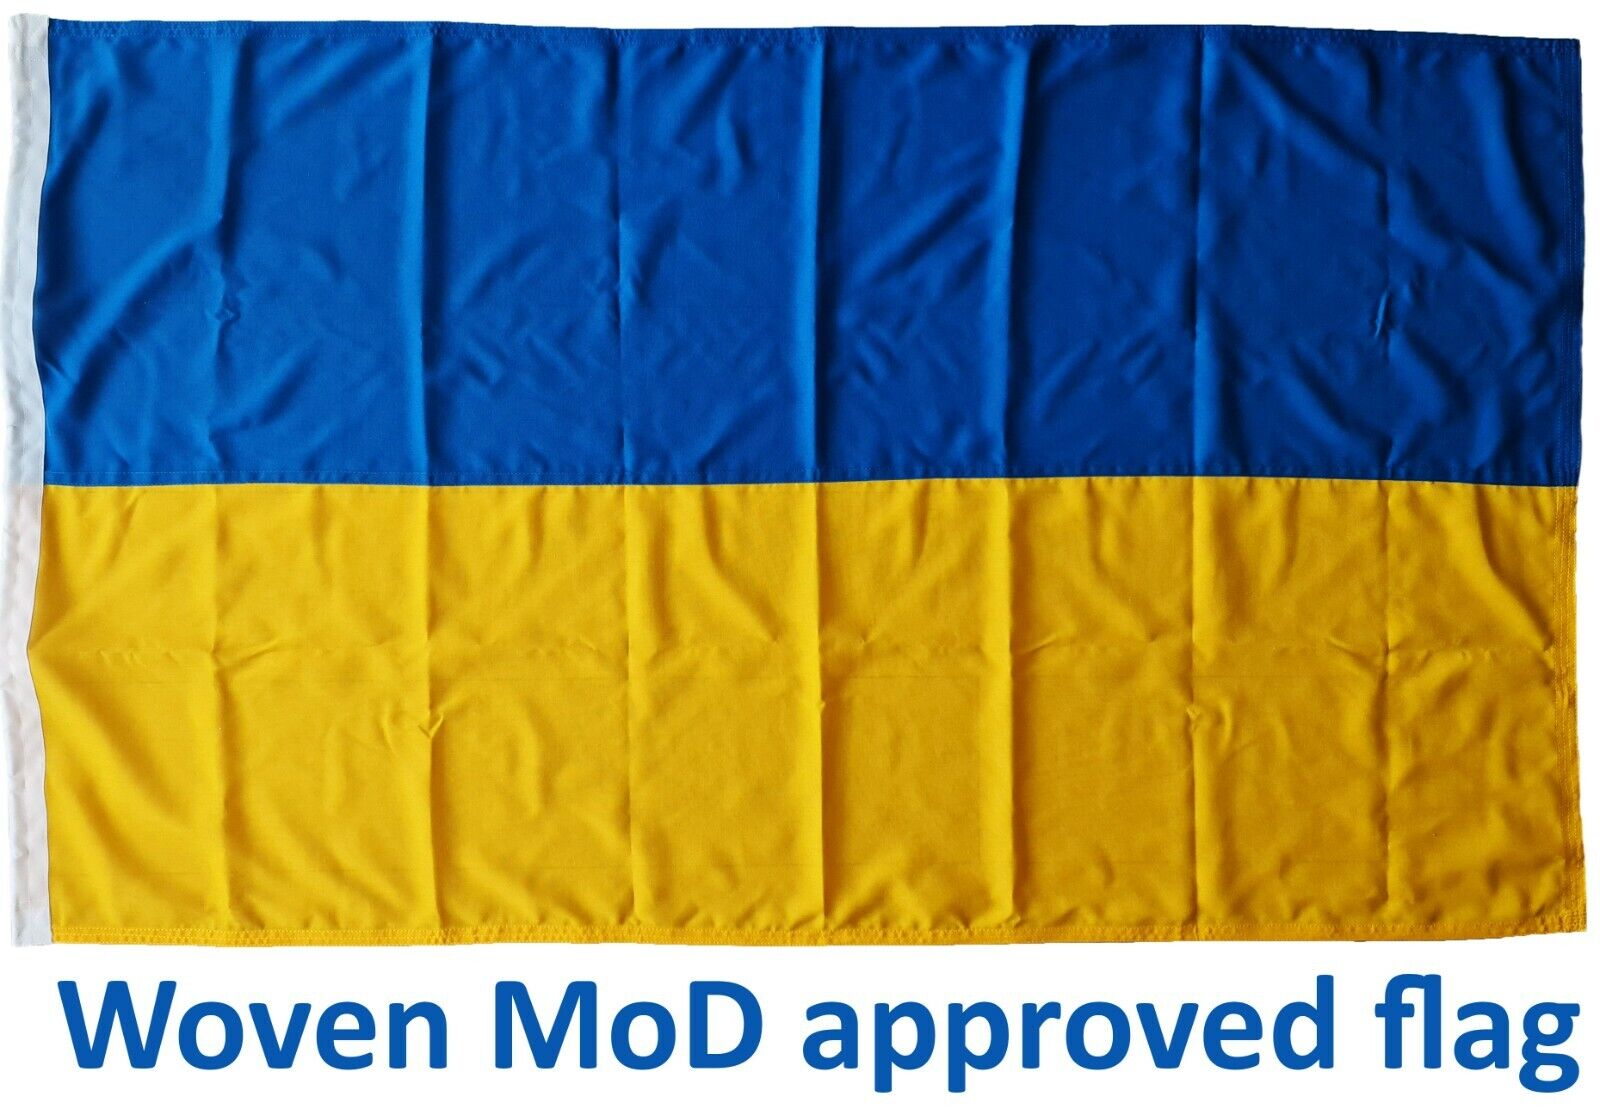 Ukraine sewn MoD approved flag woven fabric Ukrainian UKR stitched quality 5x3ft